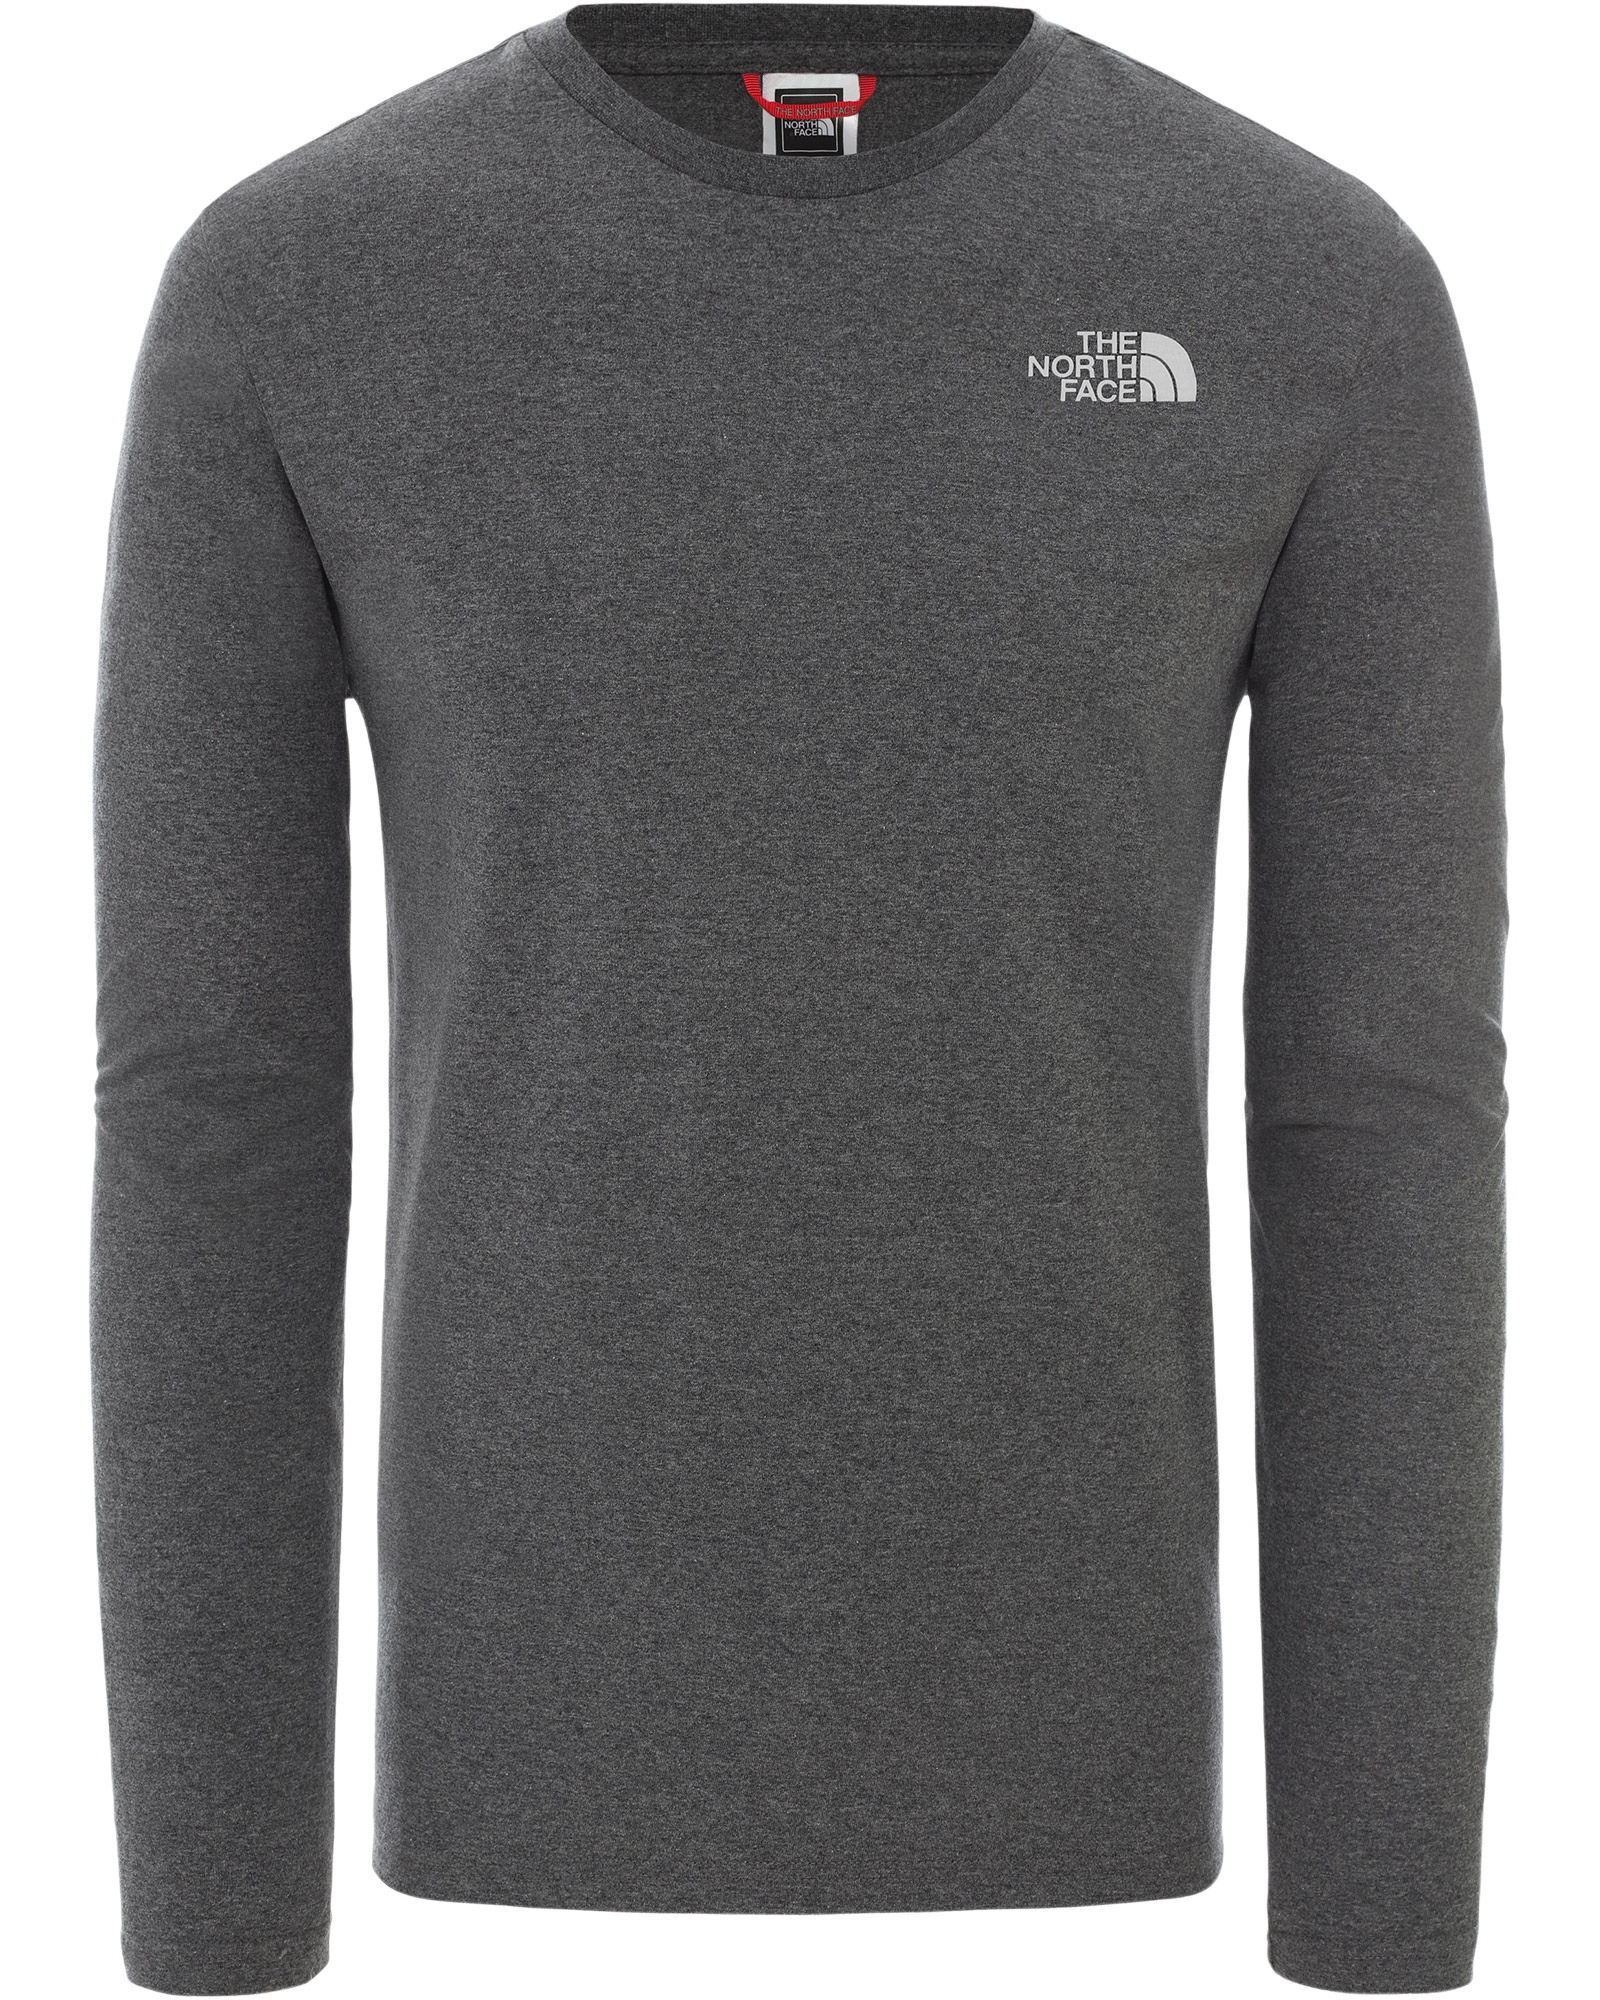 The North Face Easy Men’s Long Sleeve T Shirt - TNF Medium Grey Heather/White Logo S